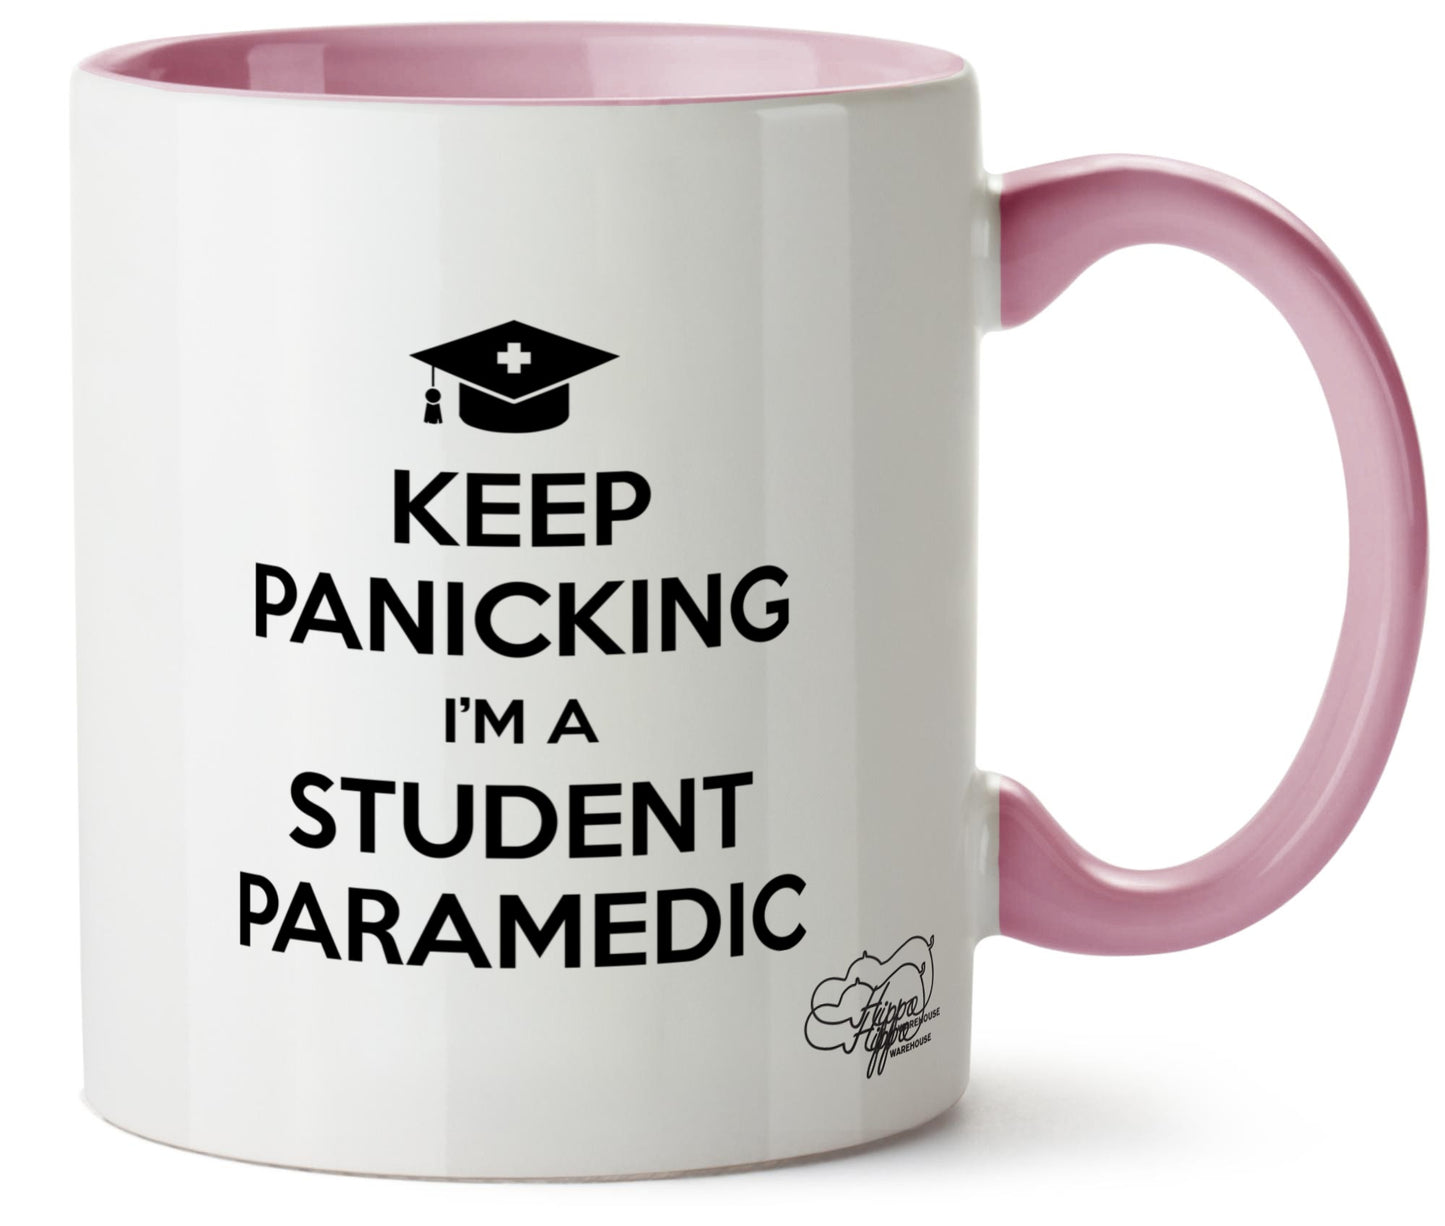 Keep panicking I'm a student paramedic Printed 11oz Mug